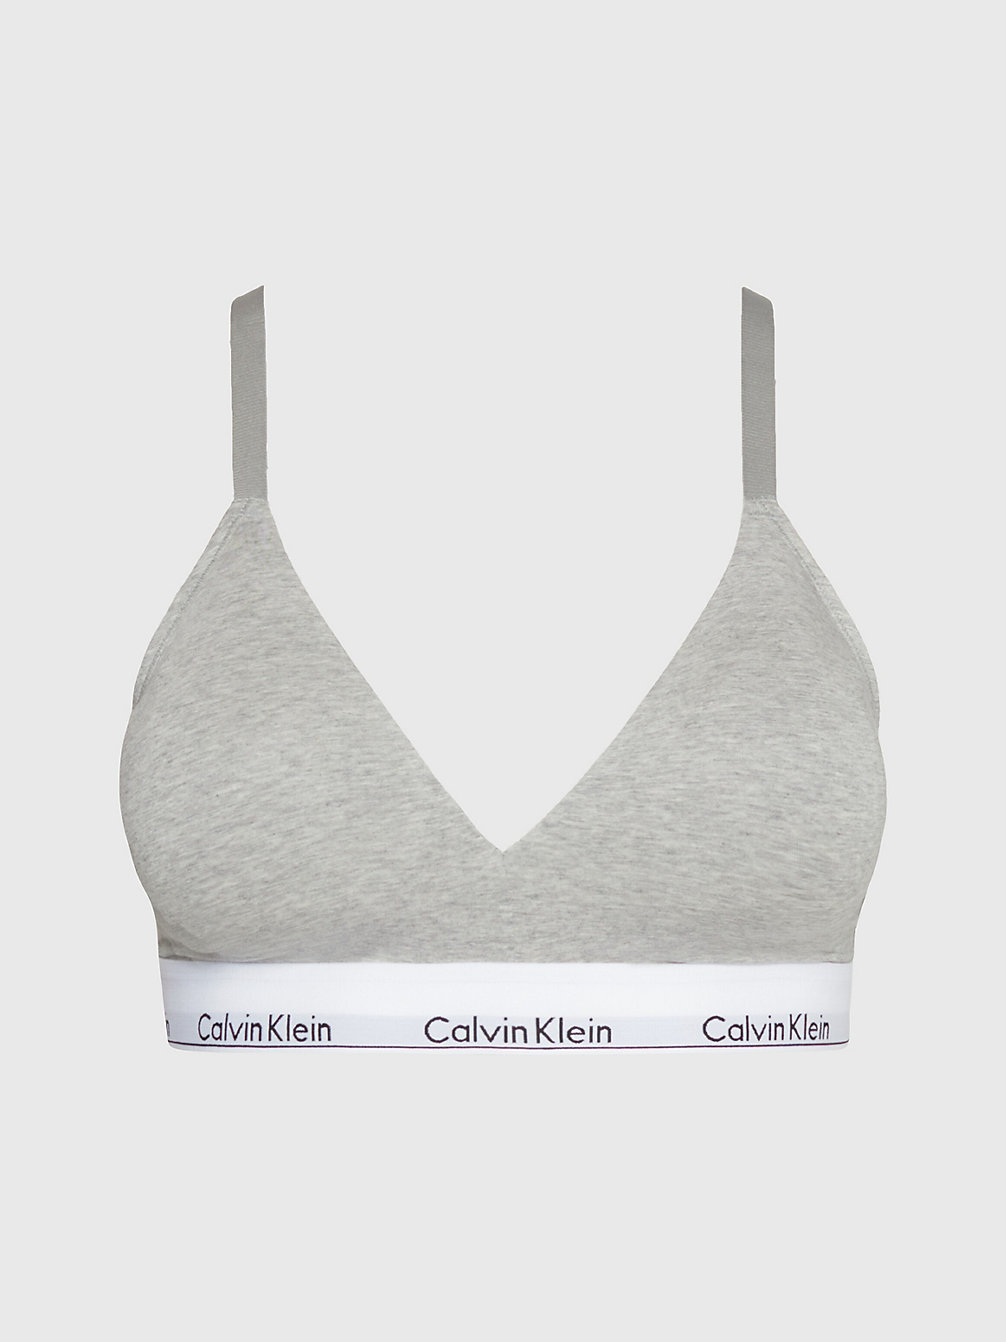 GREY HEATHER > Бюстгальтер-треугольник плюс-сайз - Modern Cotton > undefined Женщины - Calvin Klein